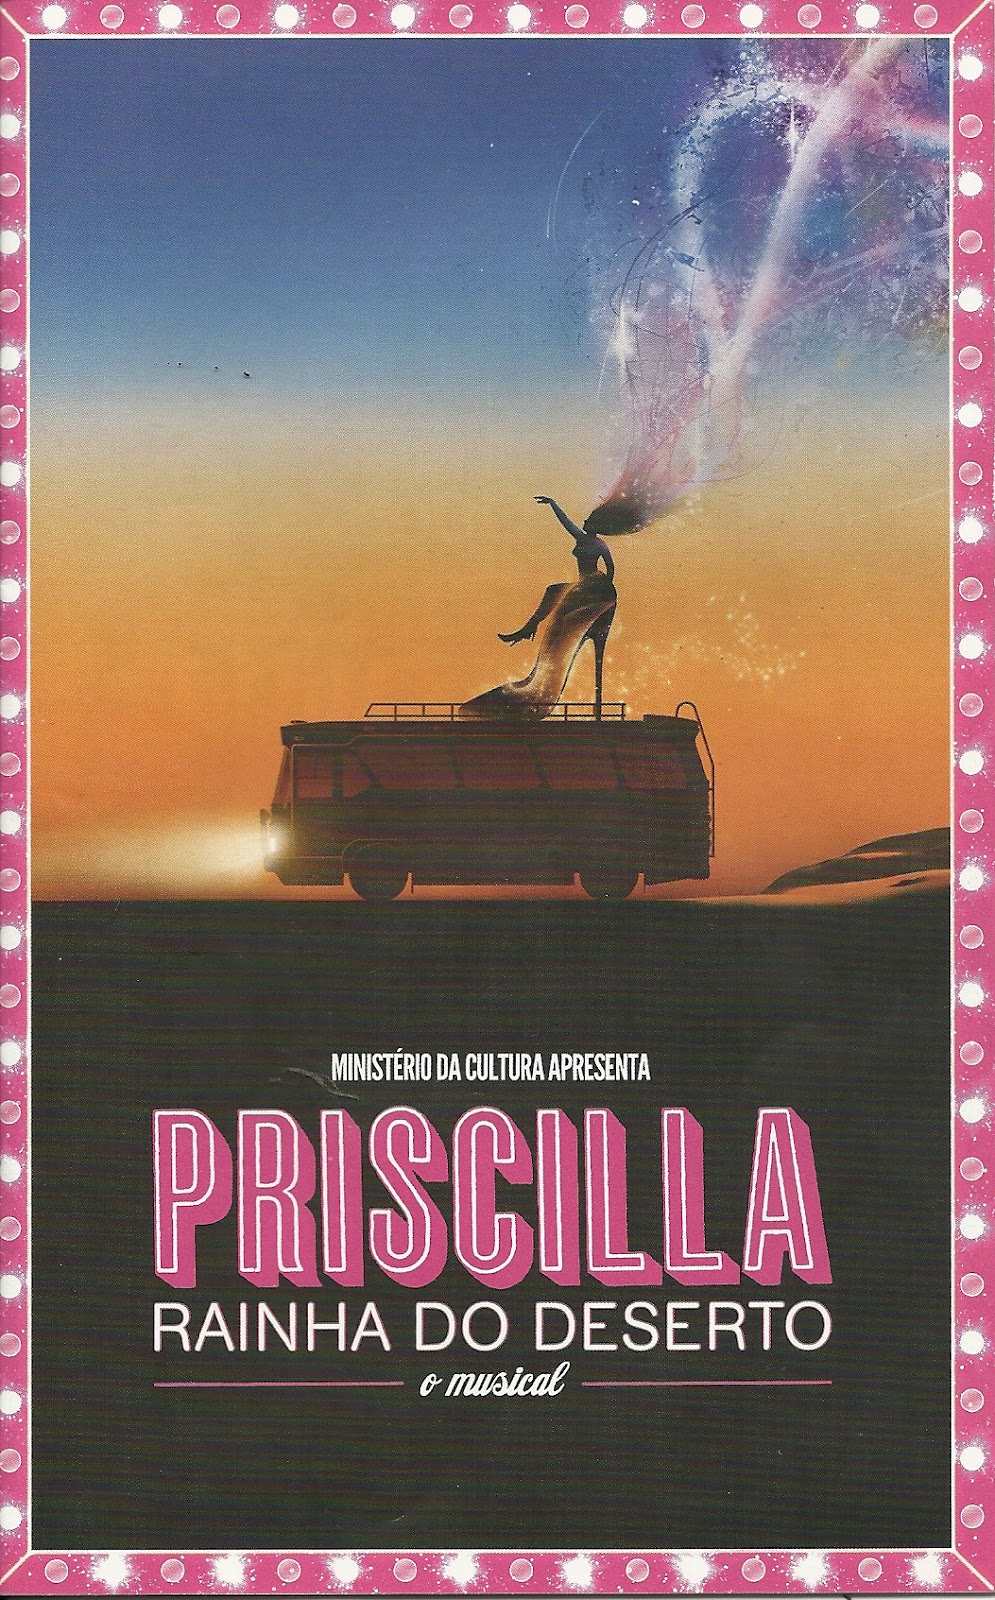 Priscilla, A Rainha Do Deserto [1994]